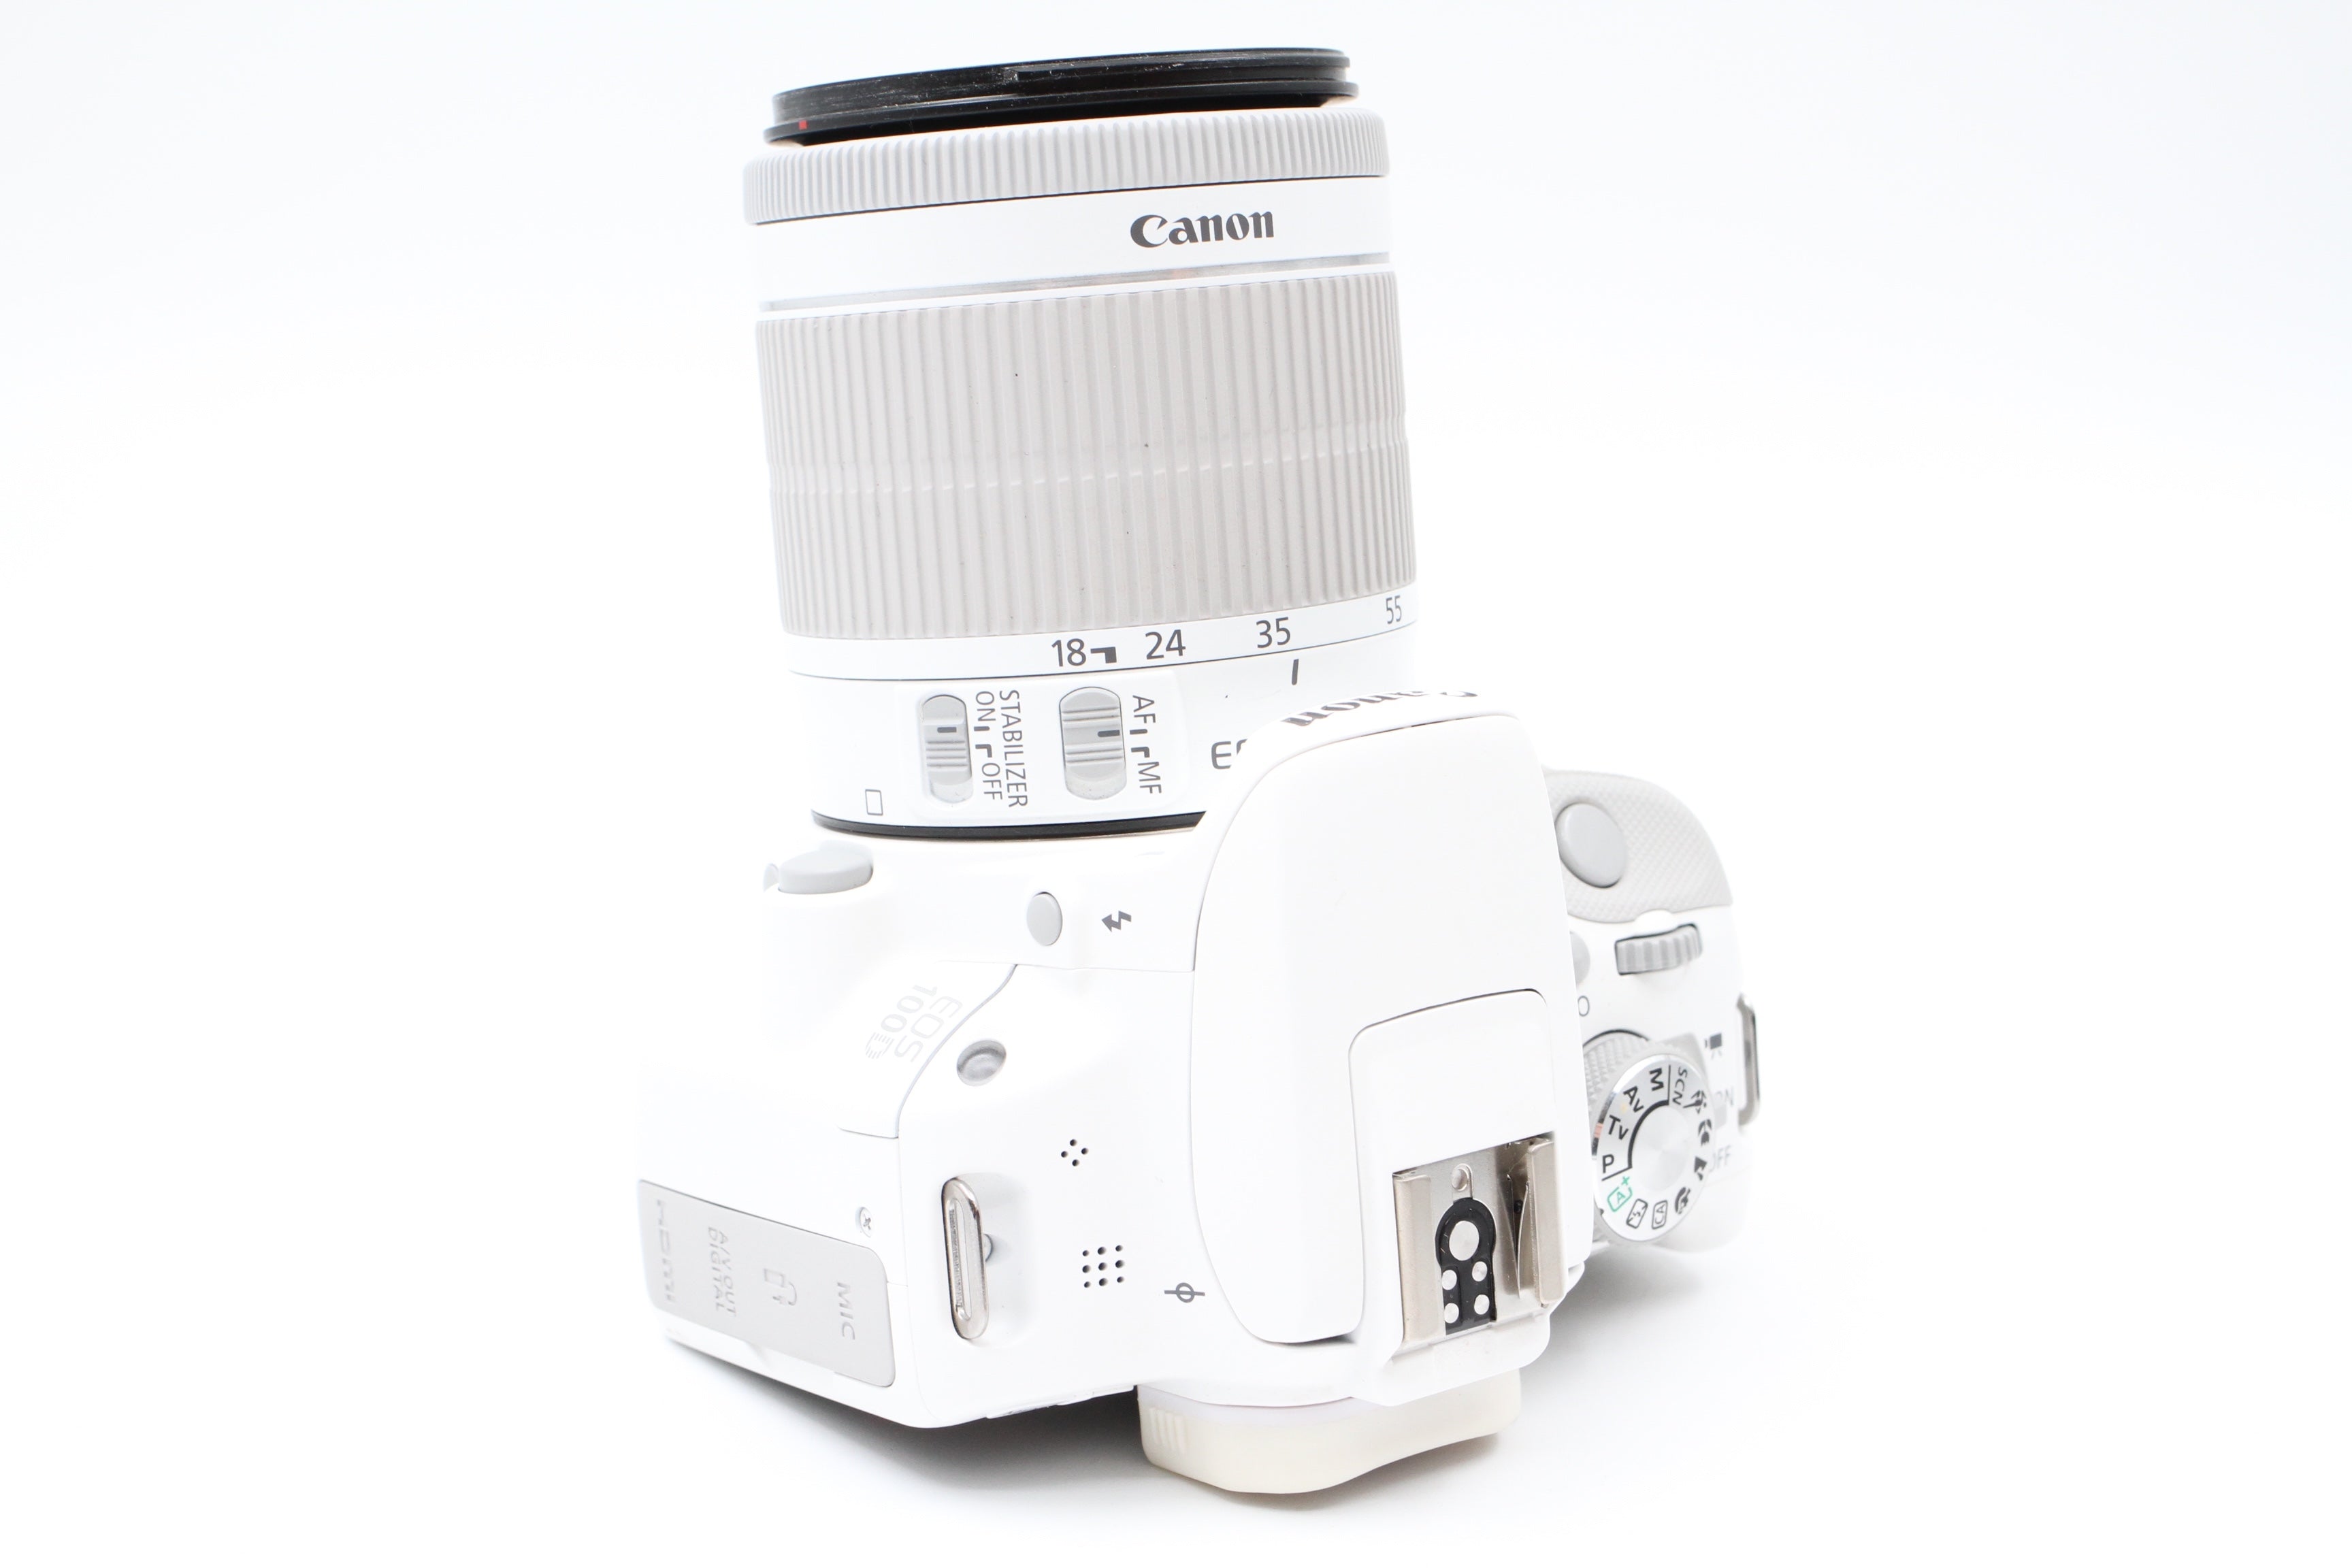 Canon 100D Digital SLR Camera w/ EF-S 18-55mm STM Lens, Boxed